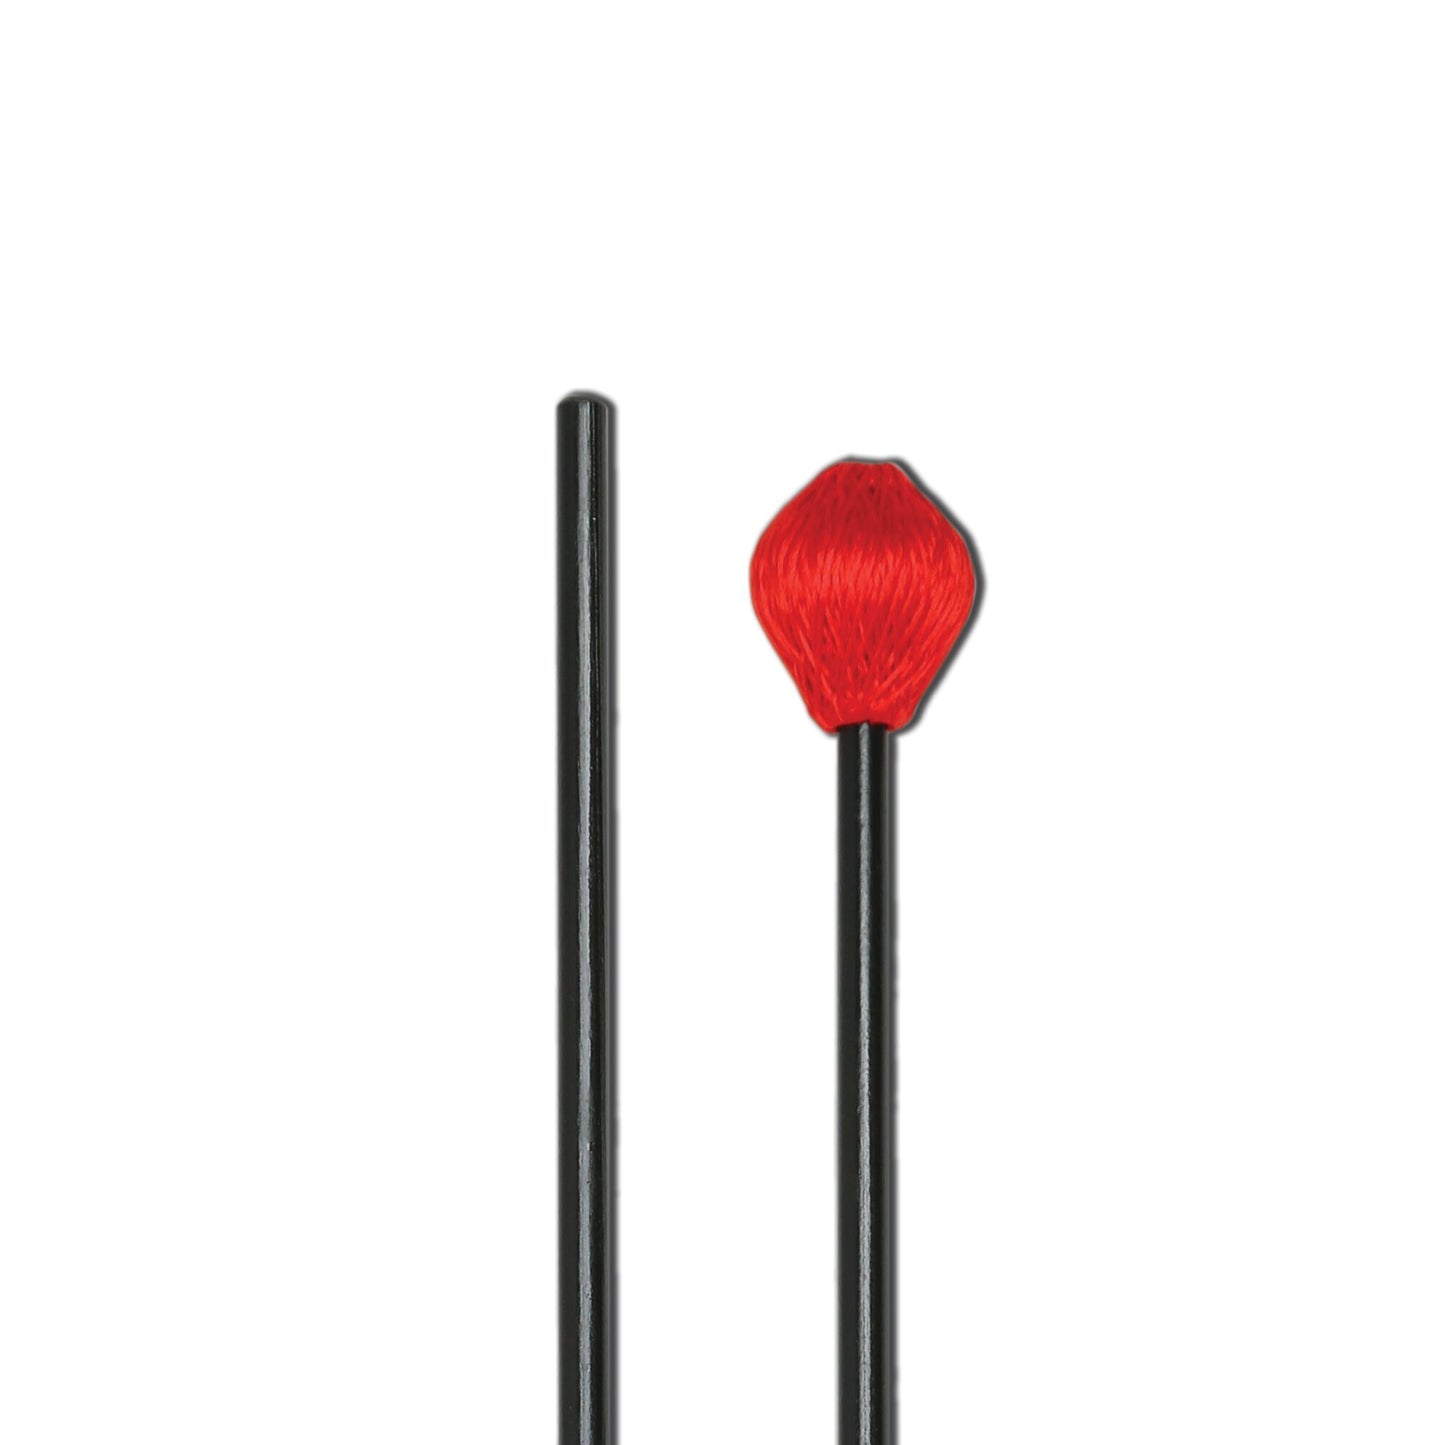 BBB6 - Balter Basics - Soft, Red Cord Mallets